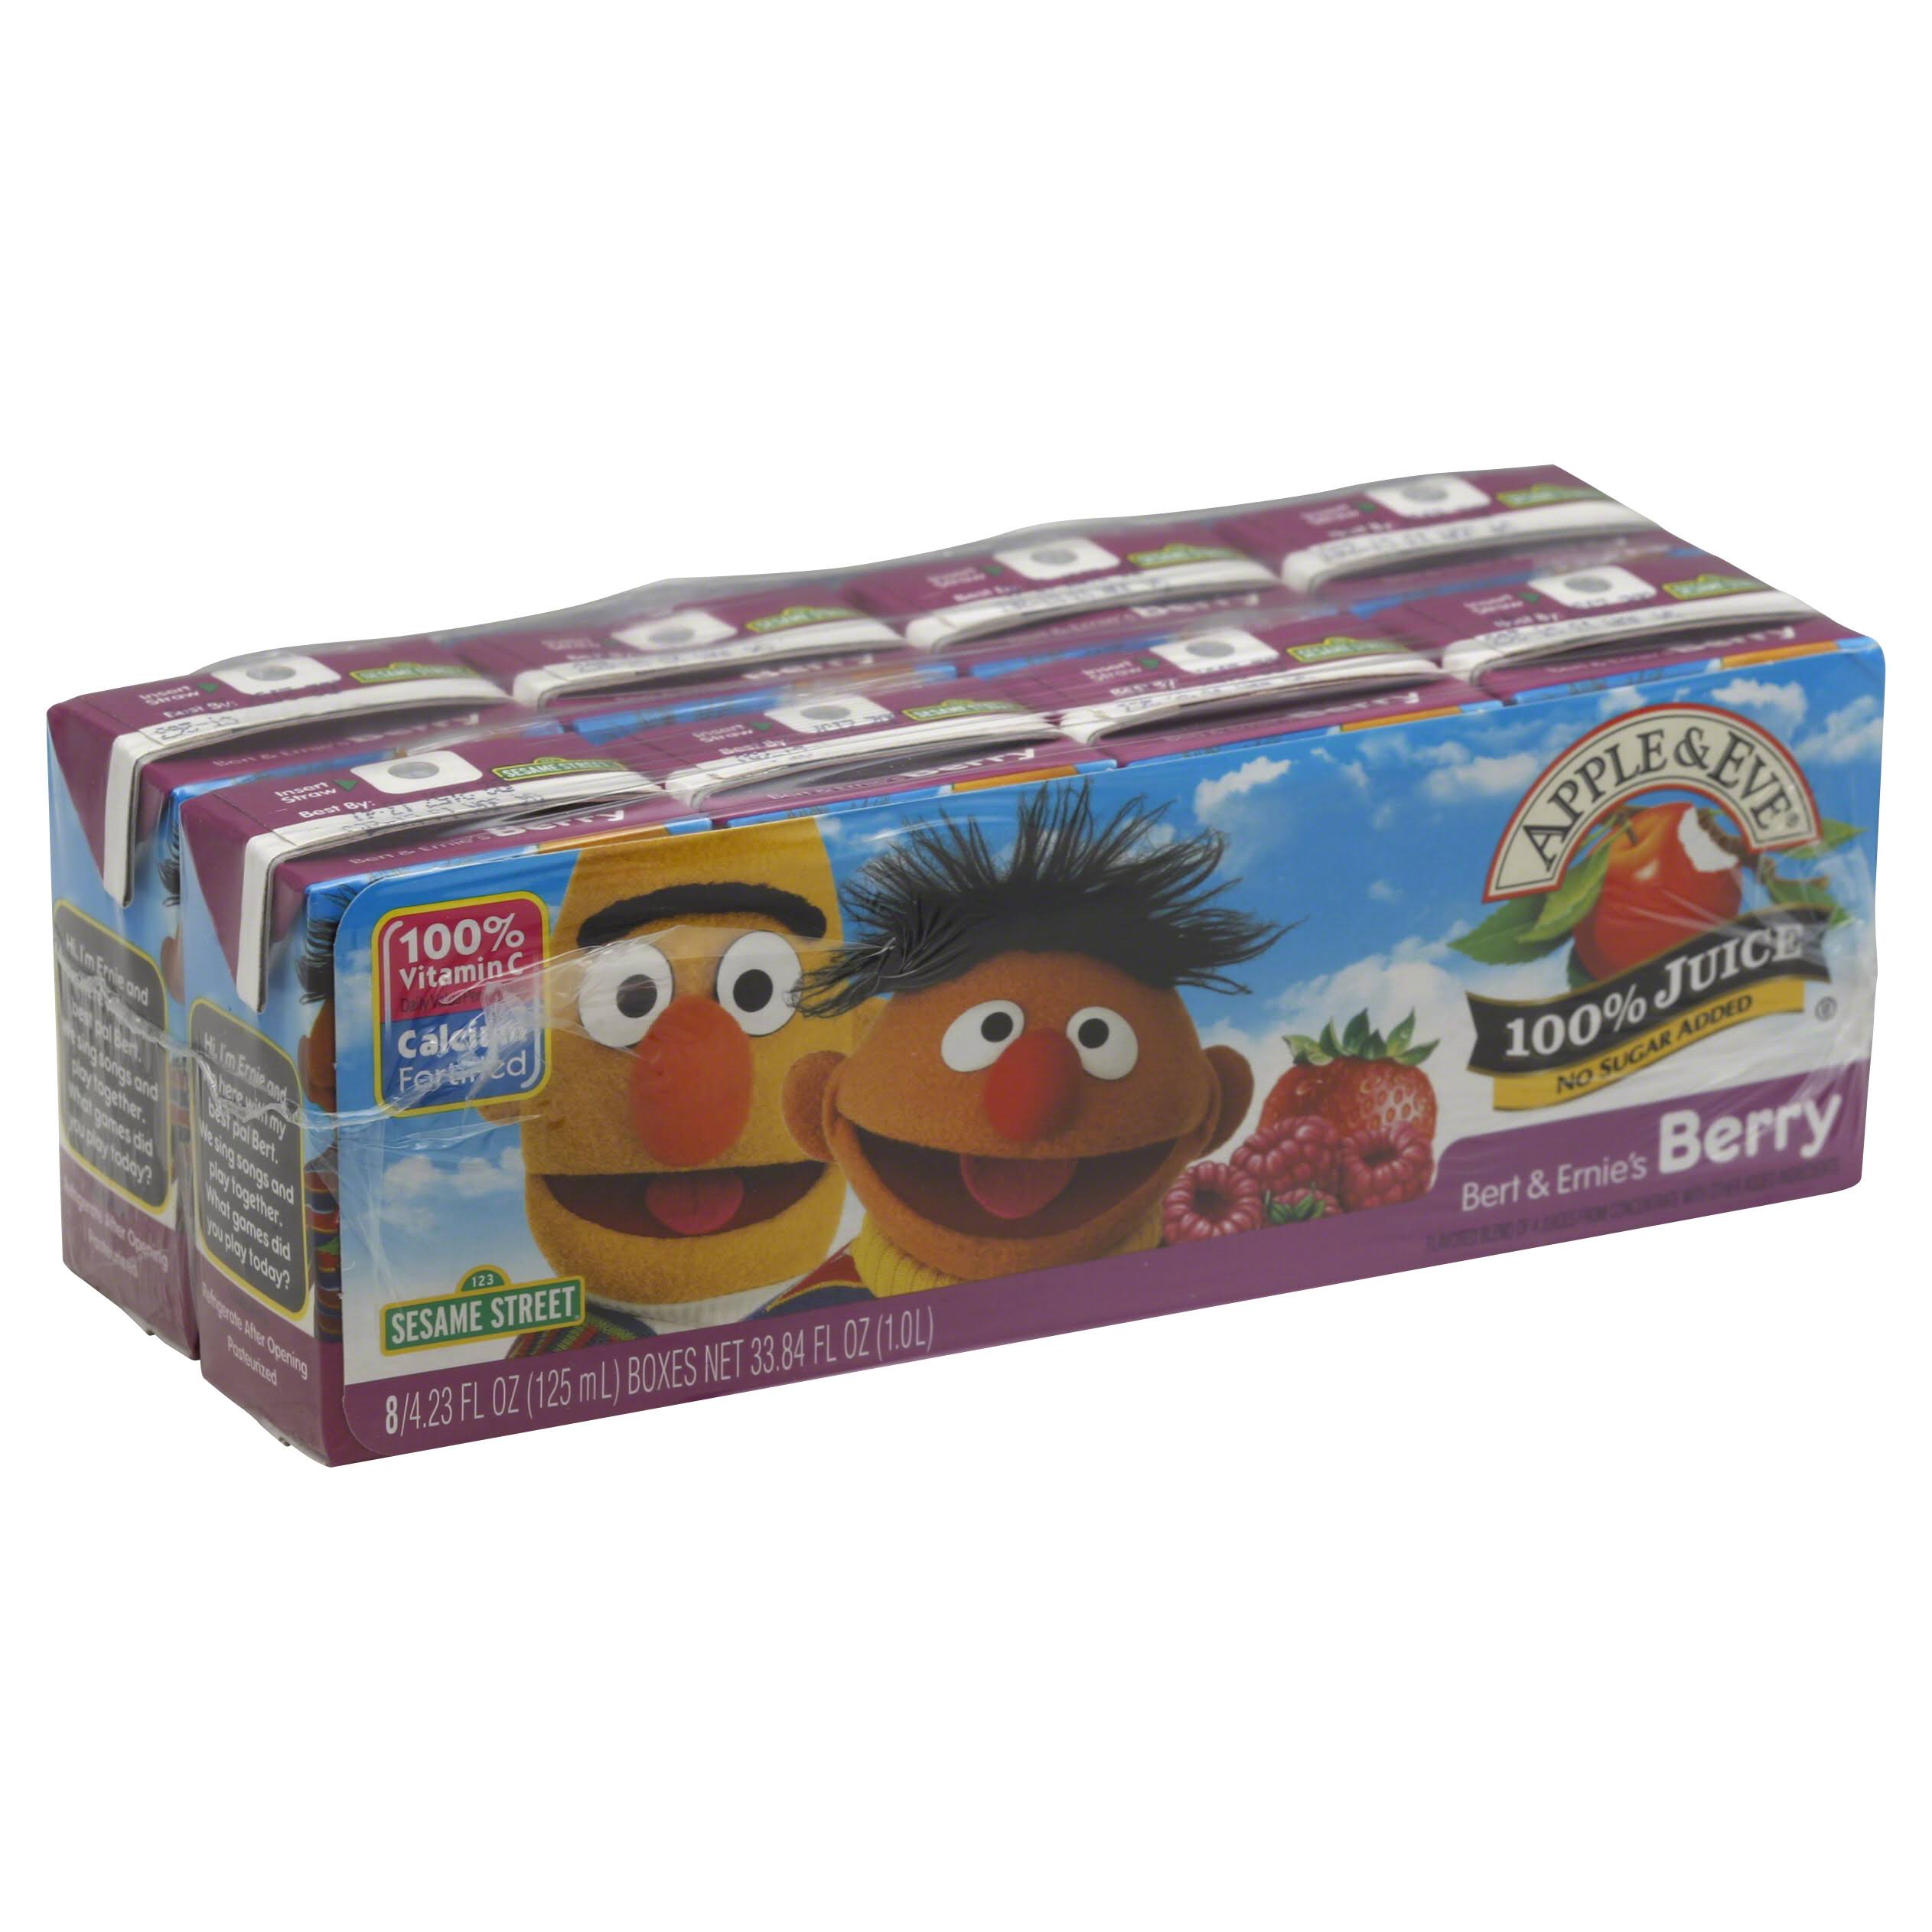 Apple and Eve Sesame Street Juice - Bert and Ernie's Berry, 4.23oz, 40ct